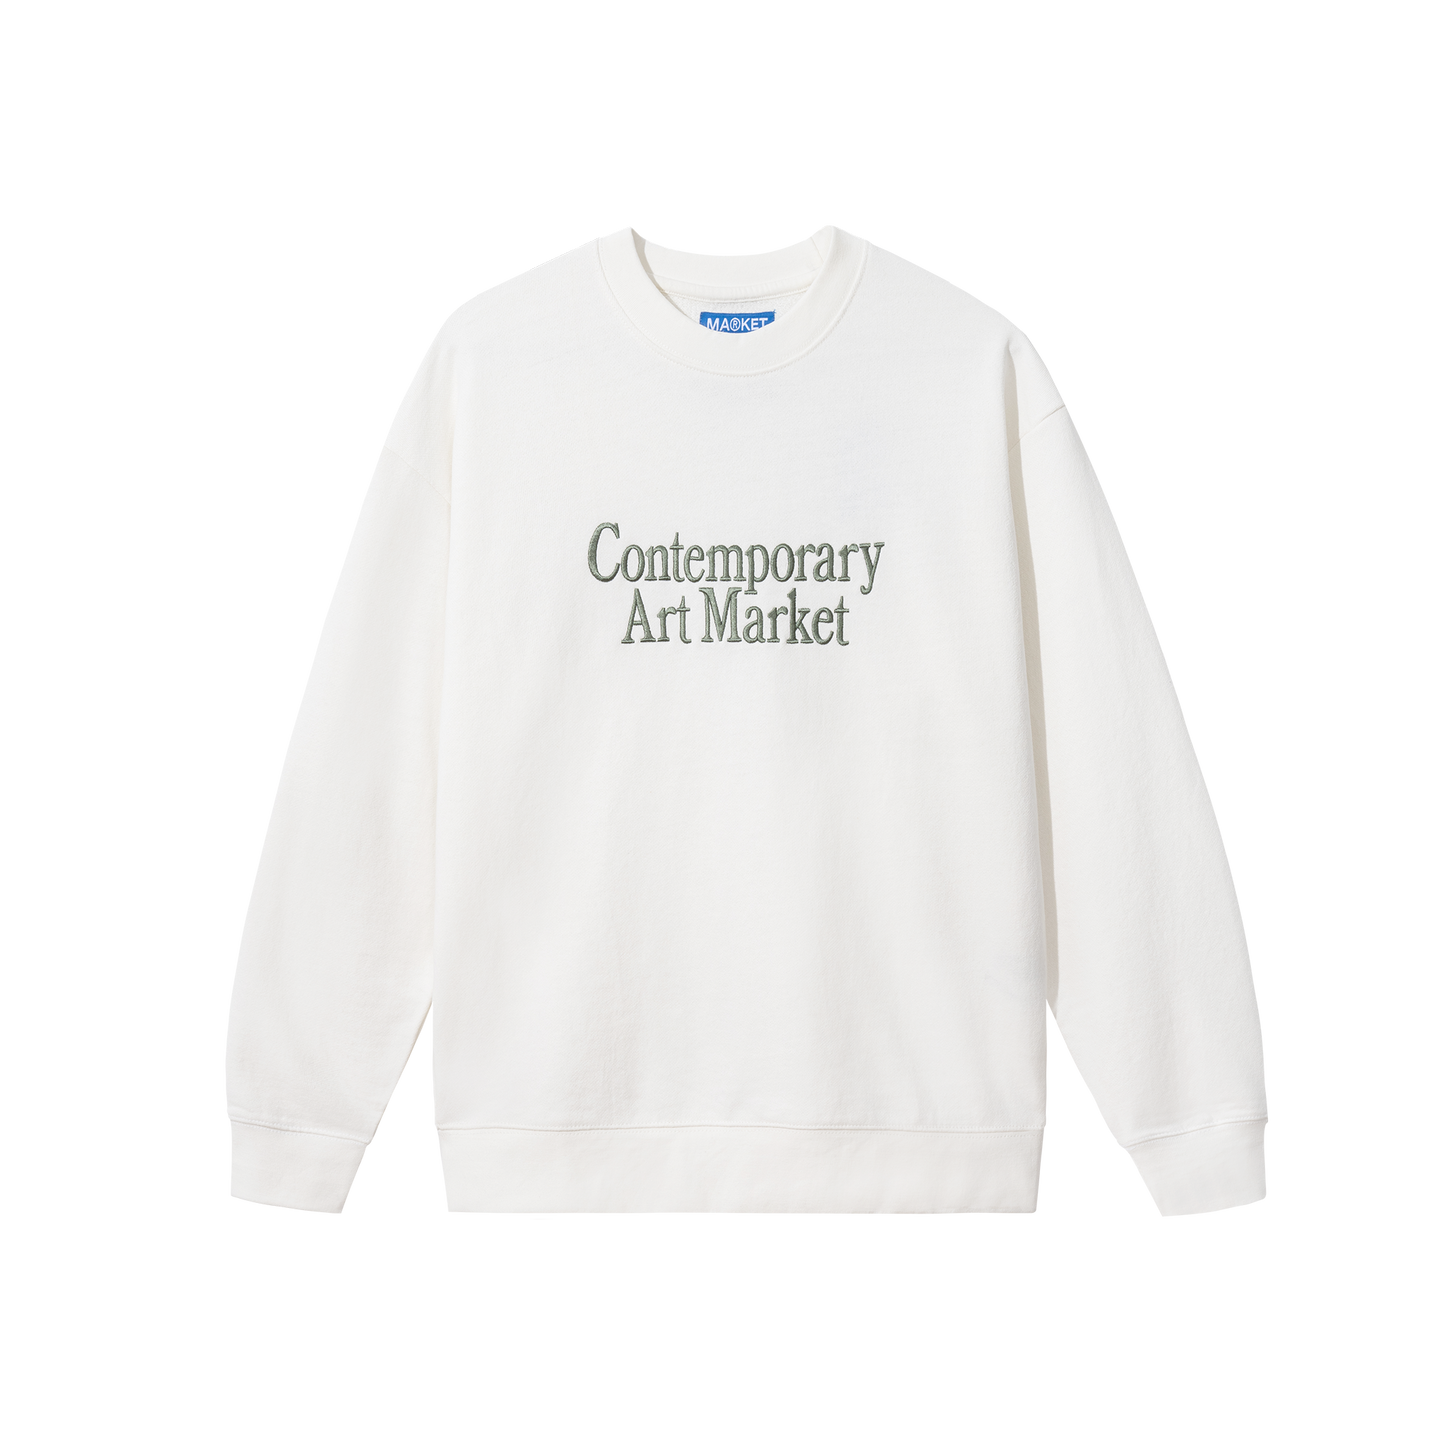 MARKET clothing brand. MARKET graphic tees. Chinatown Market clothing. MARKET Studios crewneck sweatshirt . 100% Cotton crewneck. Graphic Streetwear Tee Shirt. 